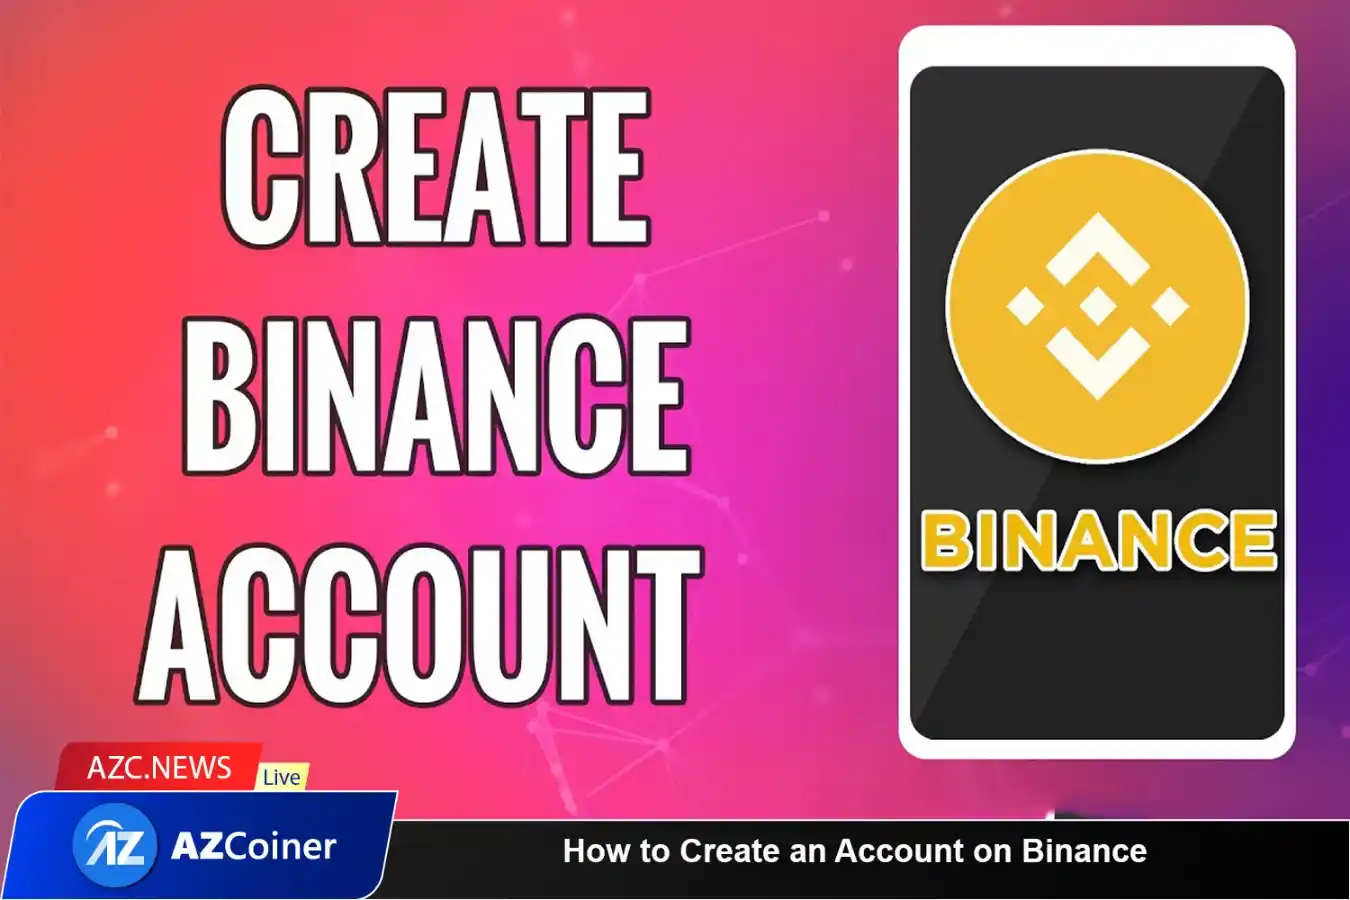 How Do I Create A Binance Account? The Step By Step Guide_65d5d157edfa2.webp